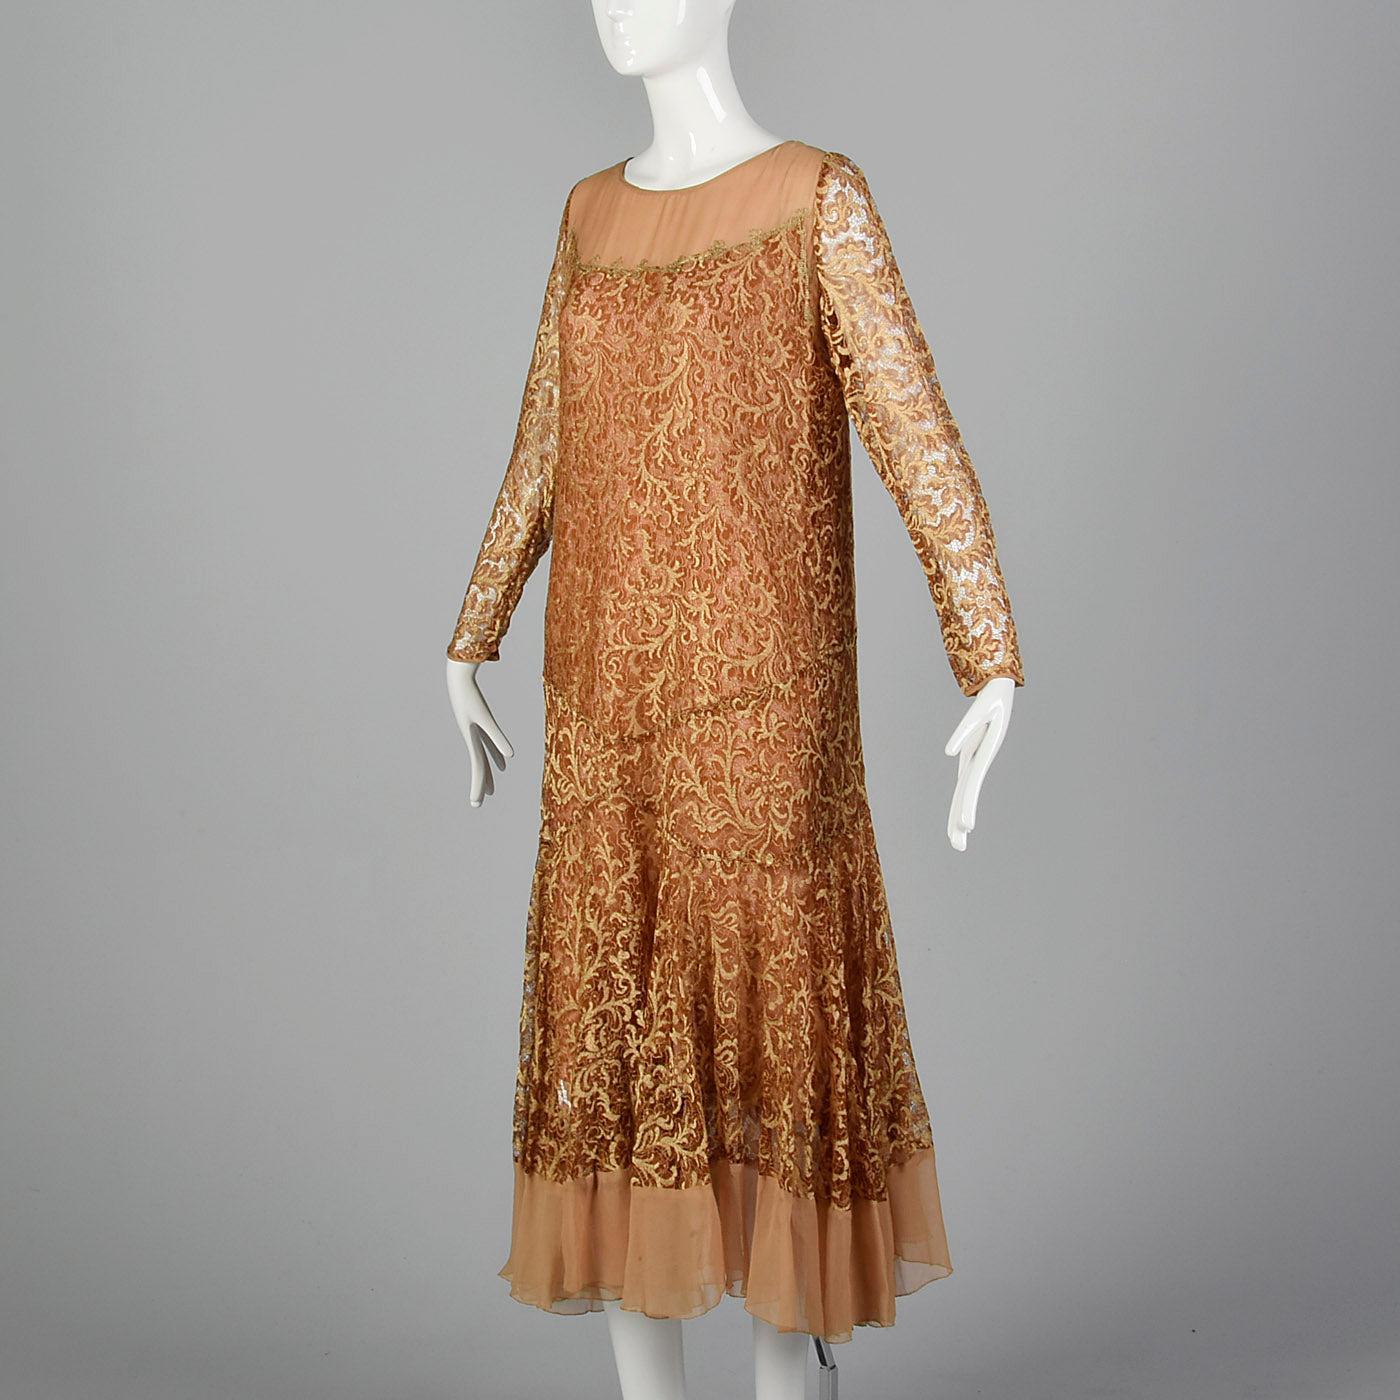 1930s Golden Brown Lace Dress with Chiffon Hem